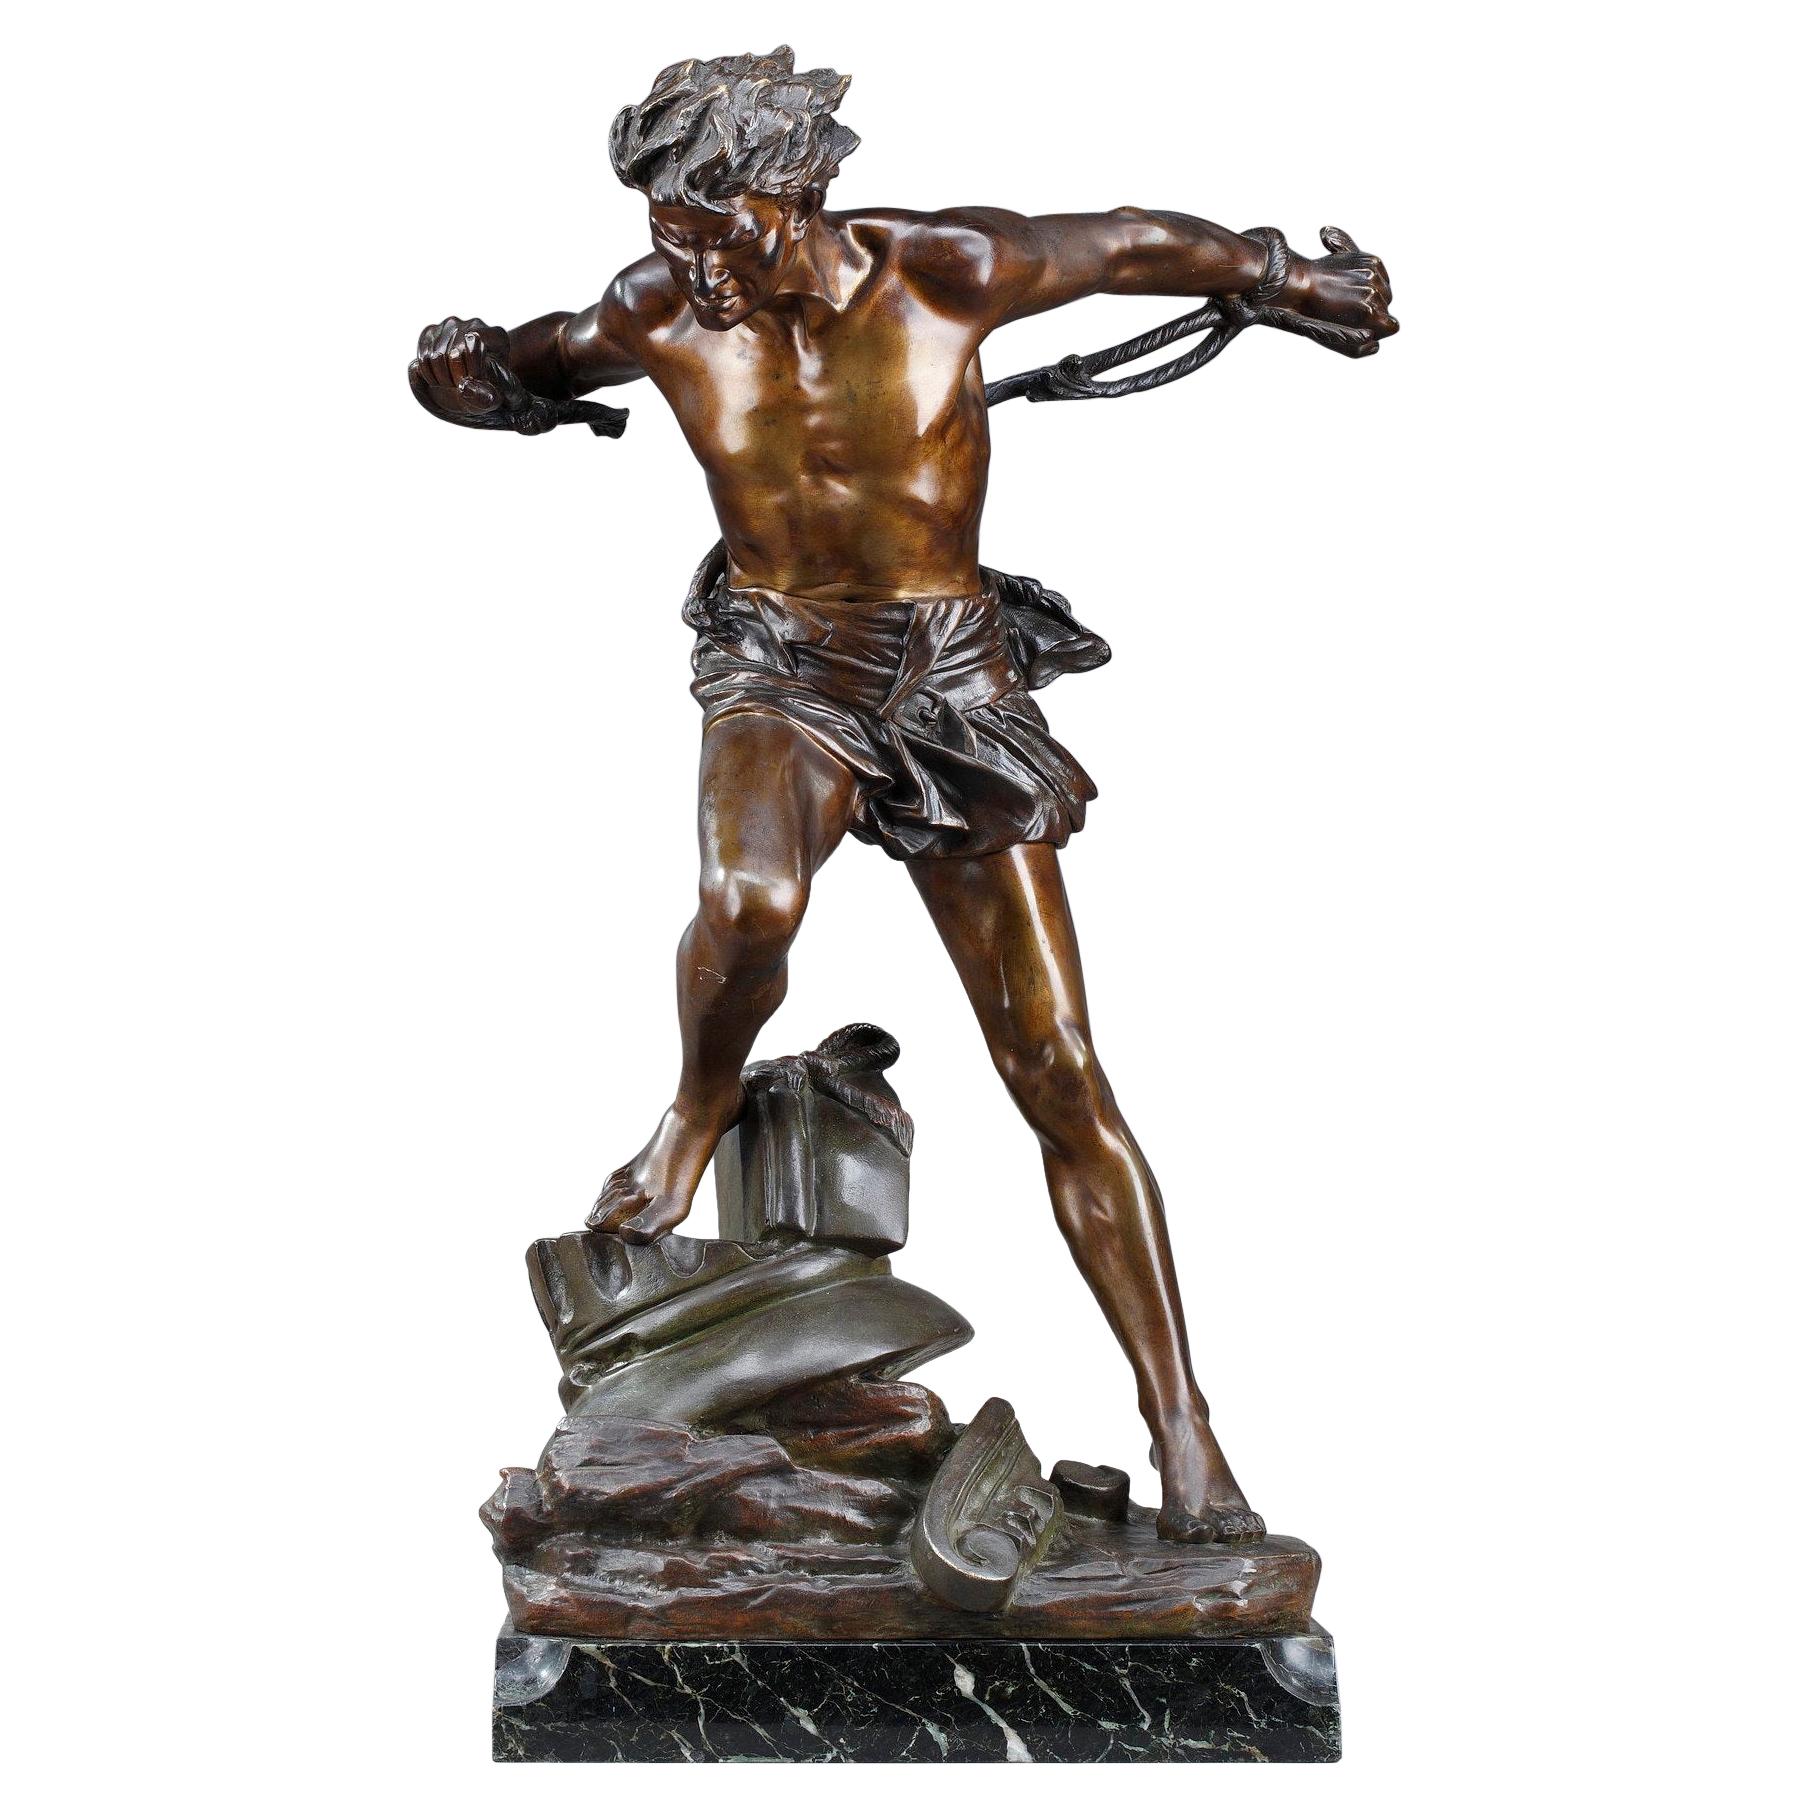 Bronze Sculpture, "The prisoner" Signed Edouard Drouot